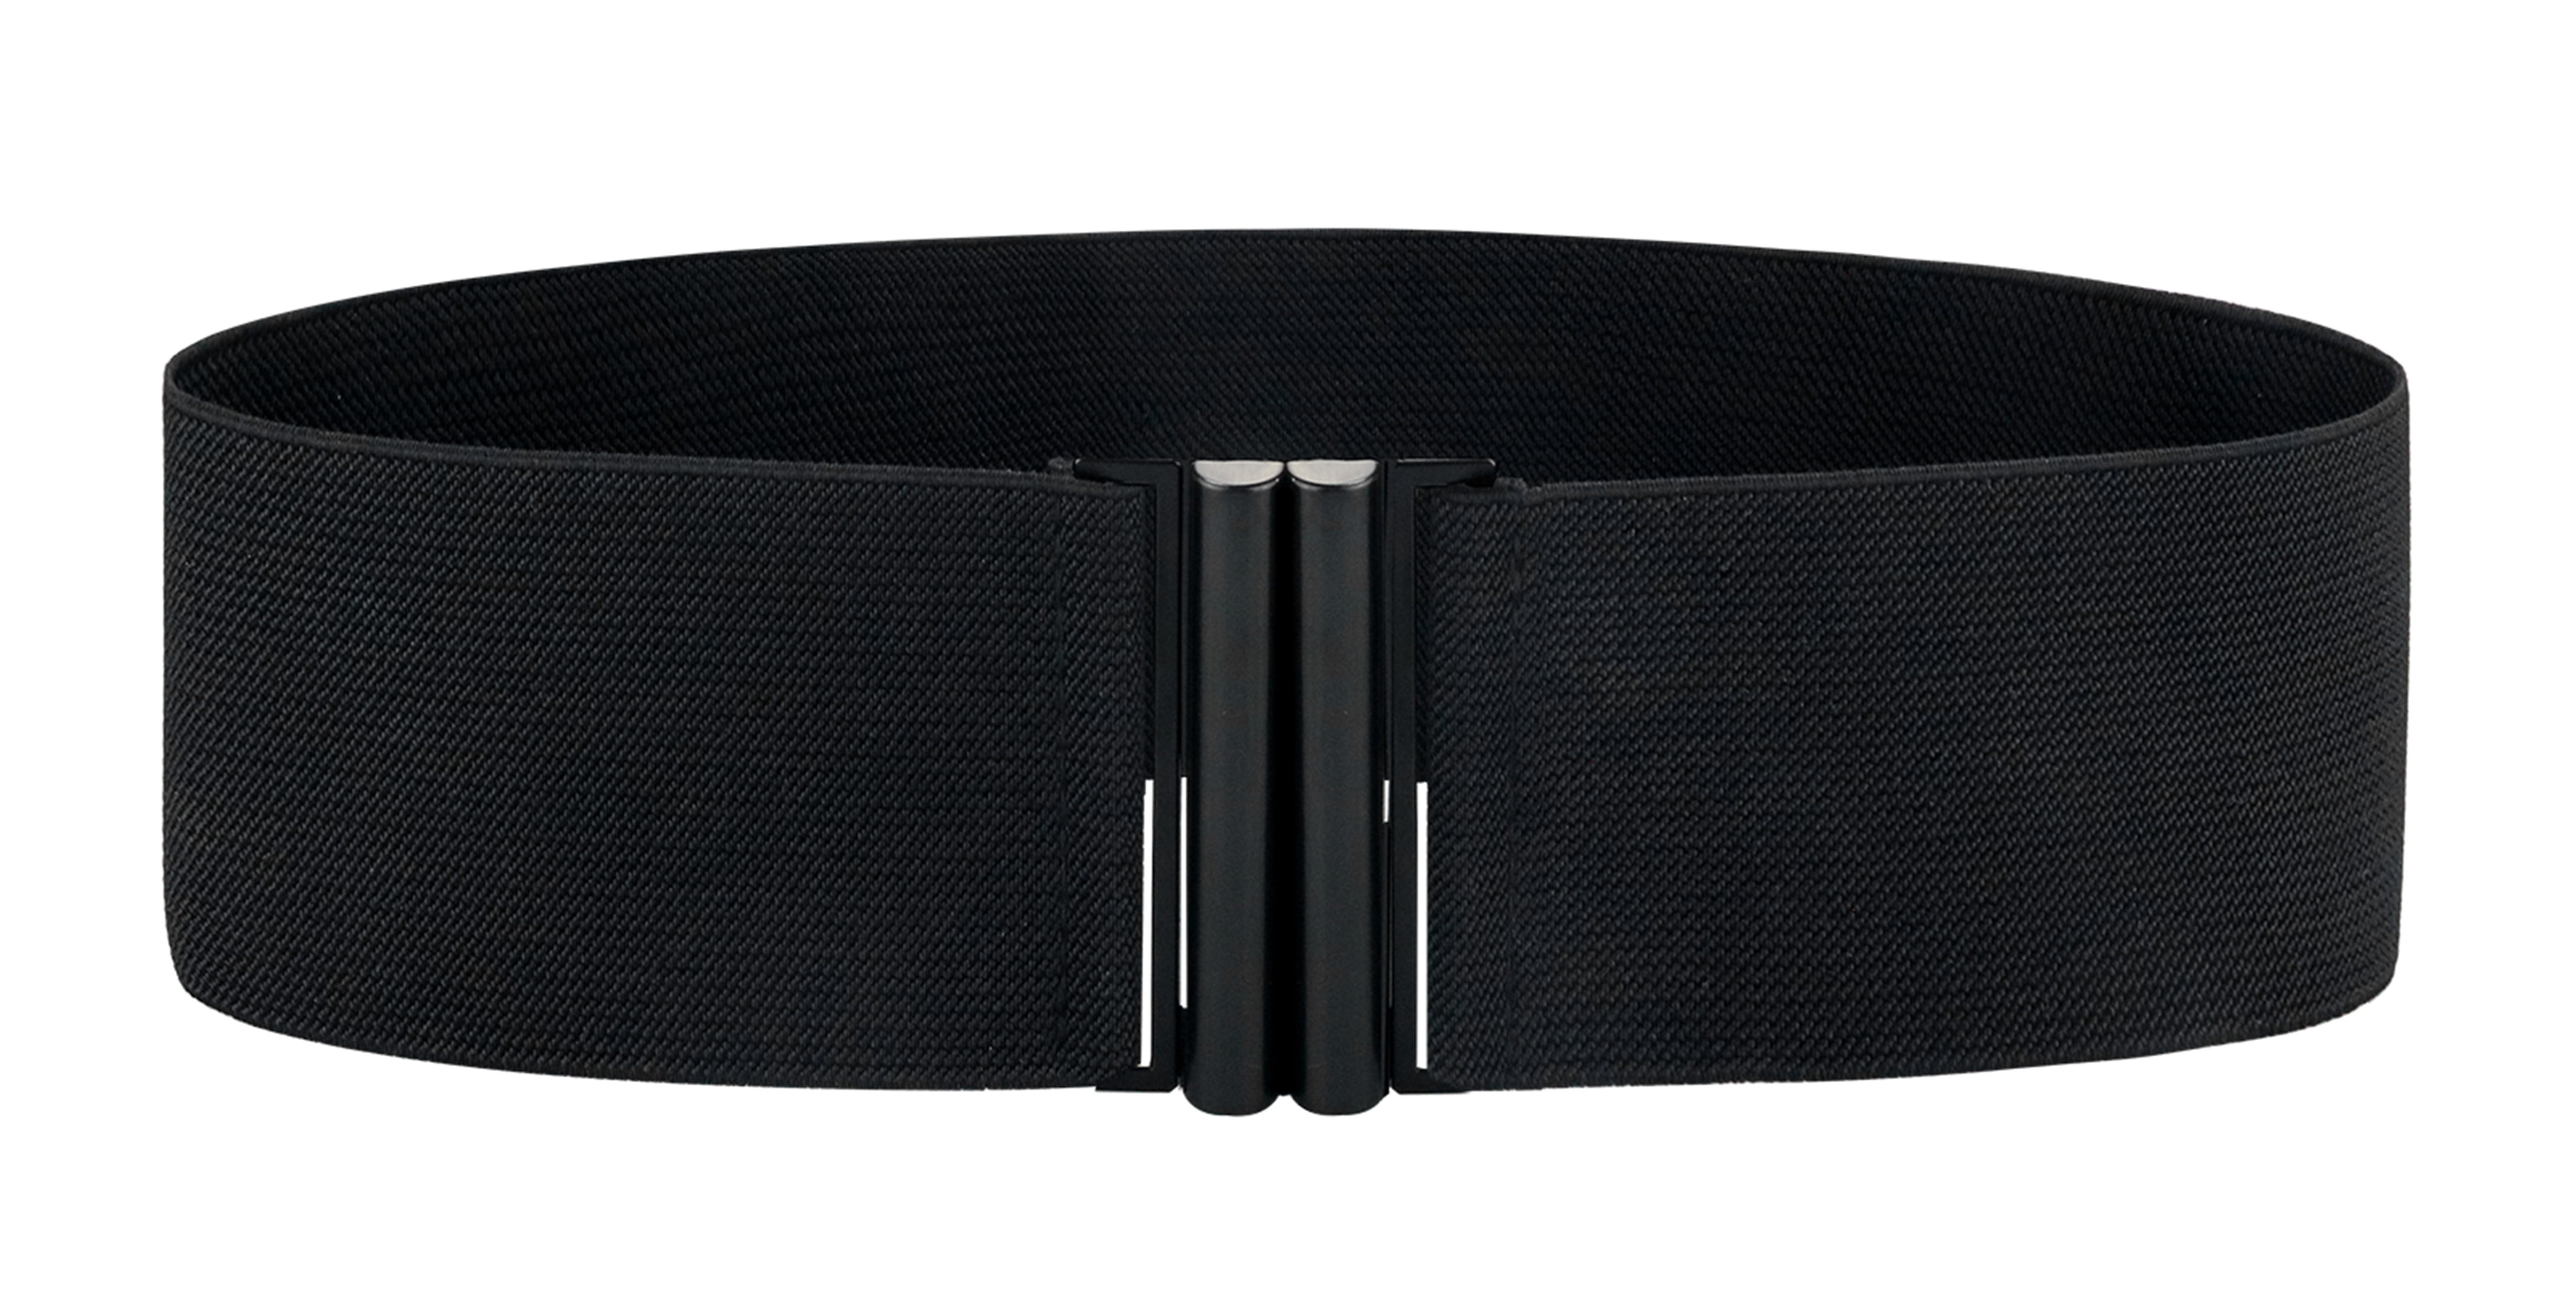 Women's Waist Belts Plus Size Dresses leather Elastic Stretch Cinch Belt  with Fashion Metal Interlock Belt Buckle 